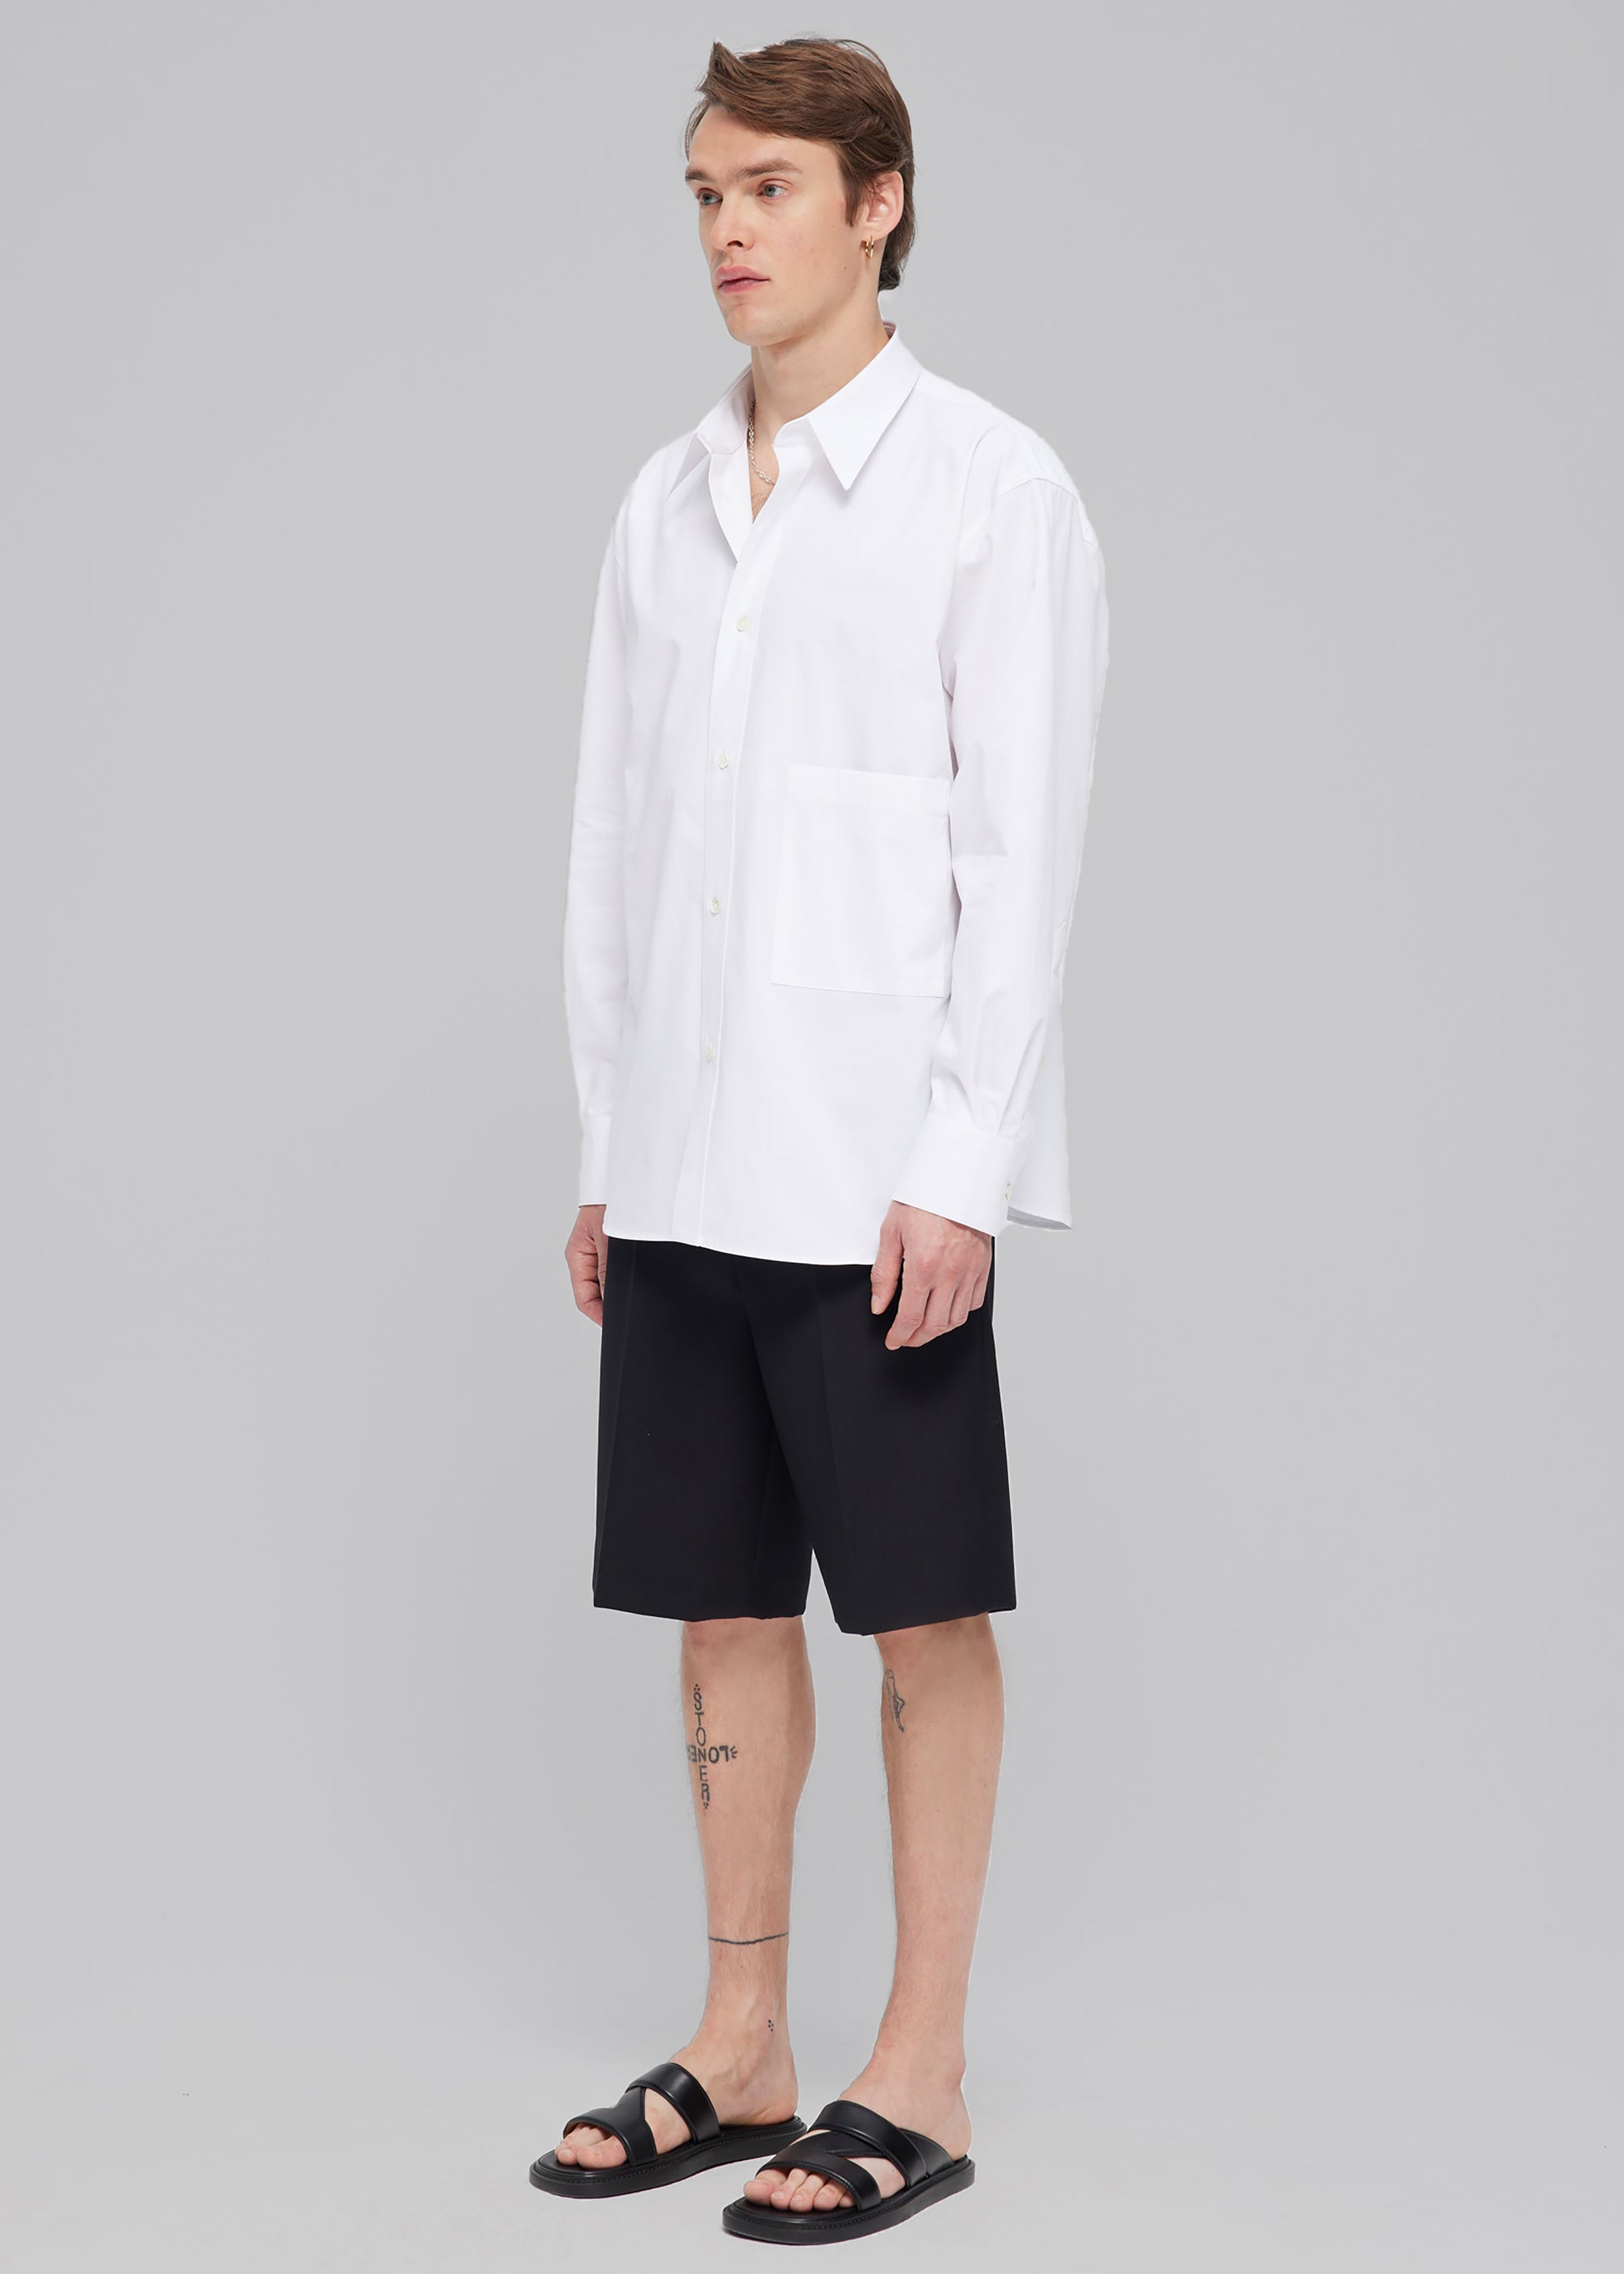 Róhe Unisex Classic Shirt - White - 8